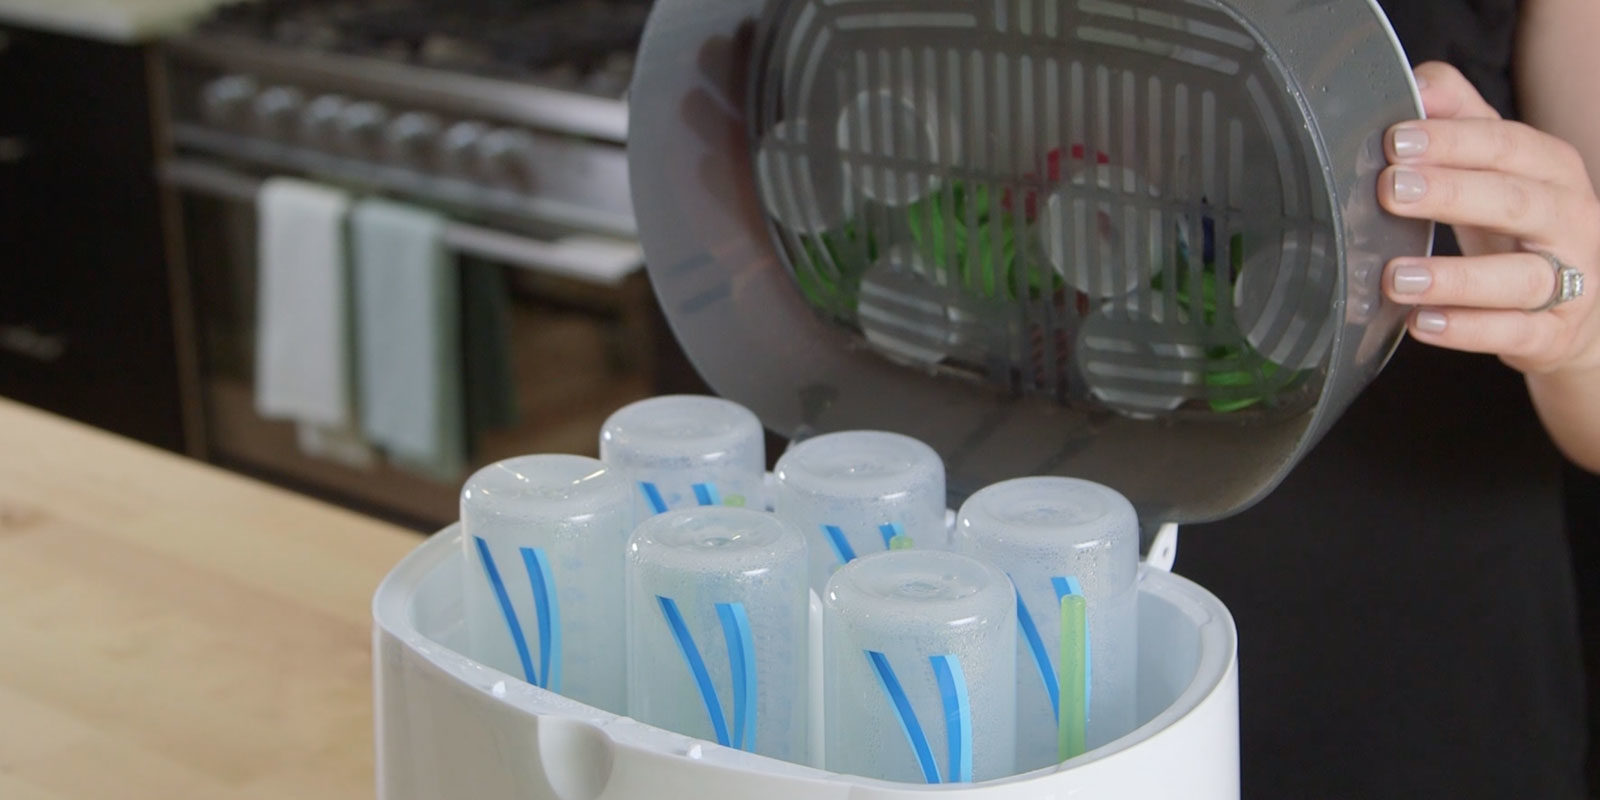 breast milk sterilising bottles